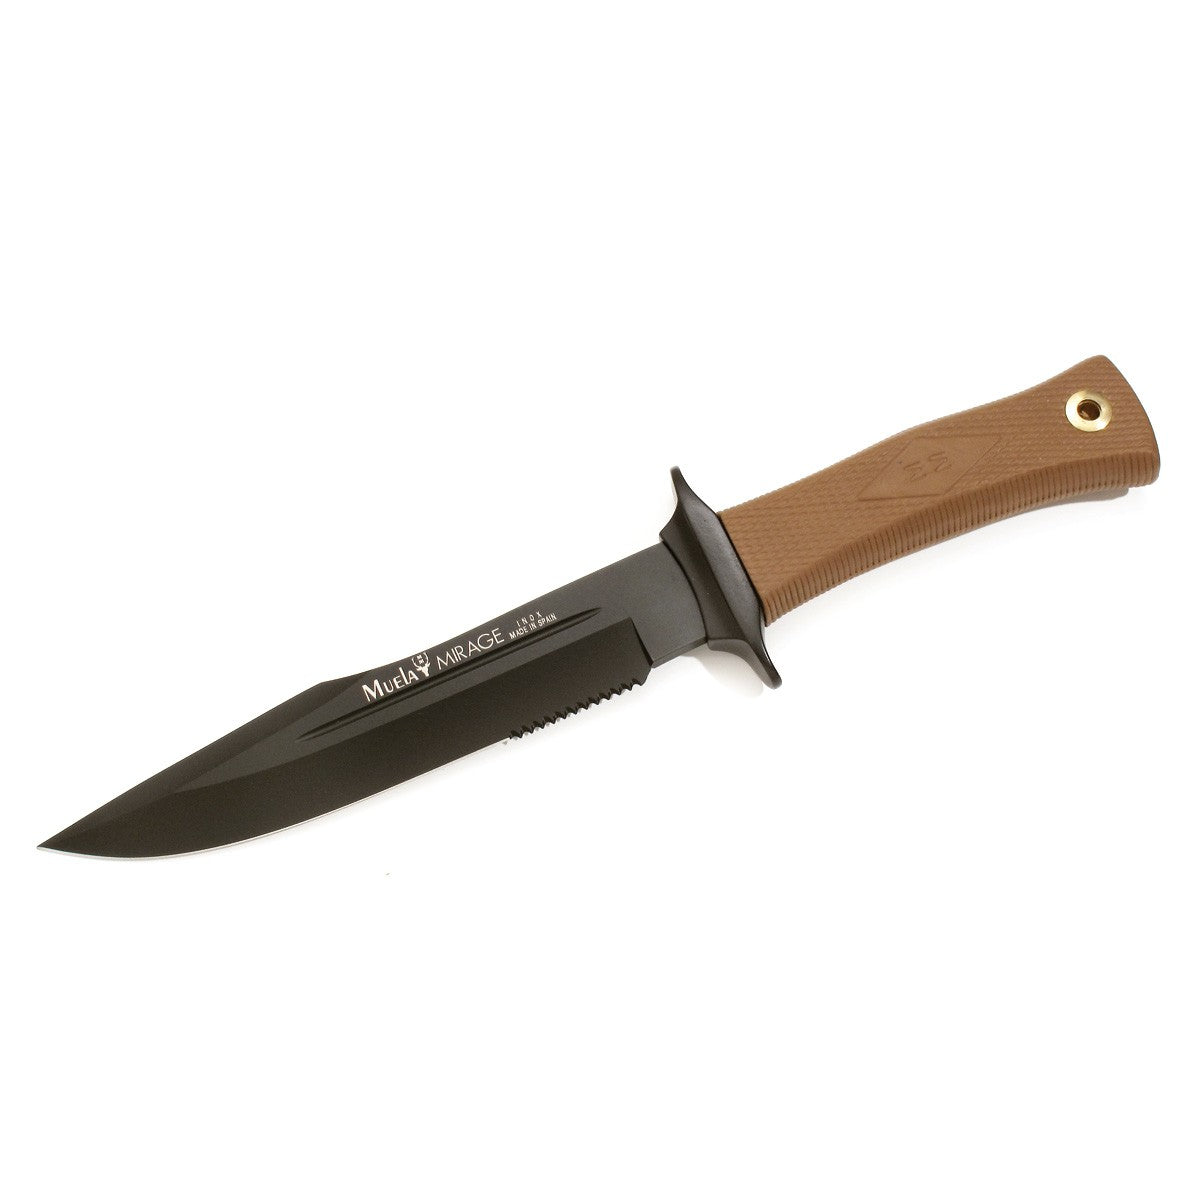 Muela | Mirage Knife - 18NM - Tefloned Blade w/ Desert Sheath